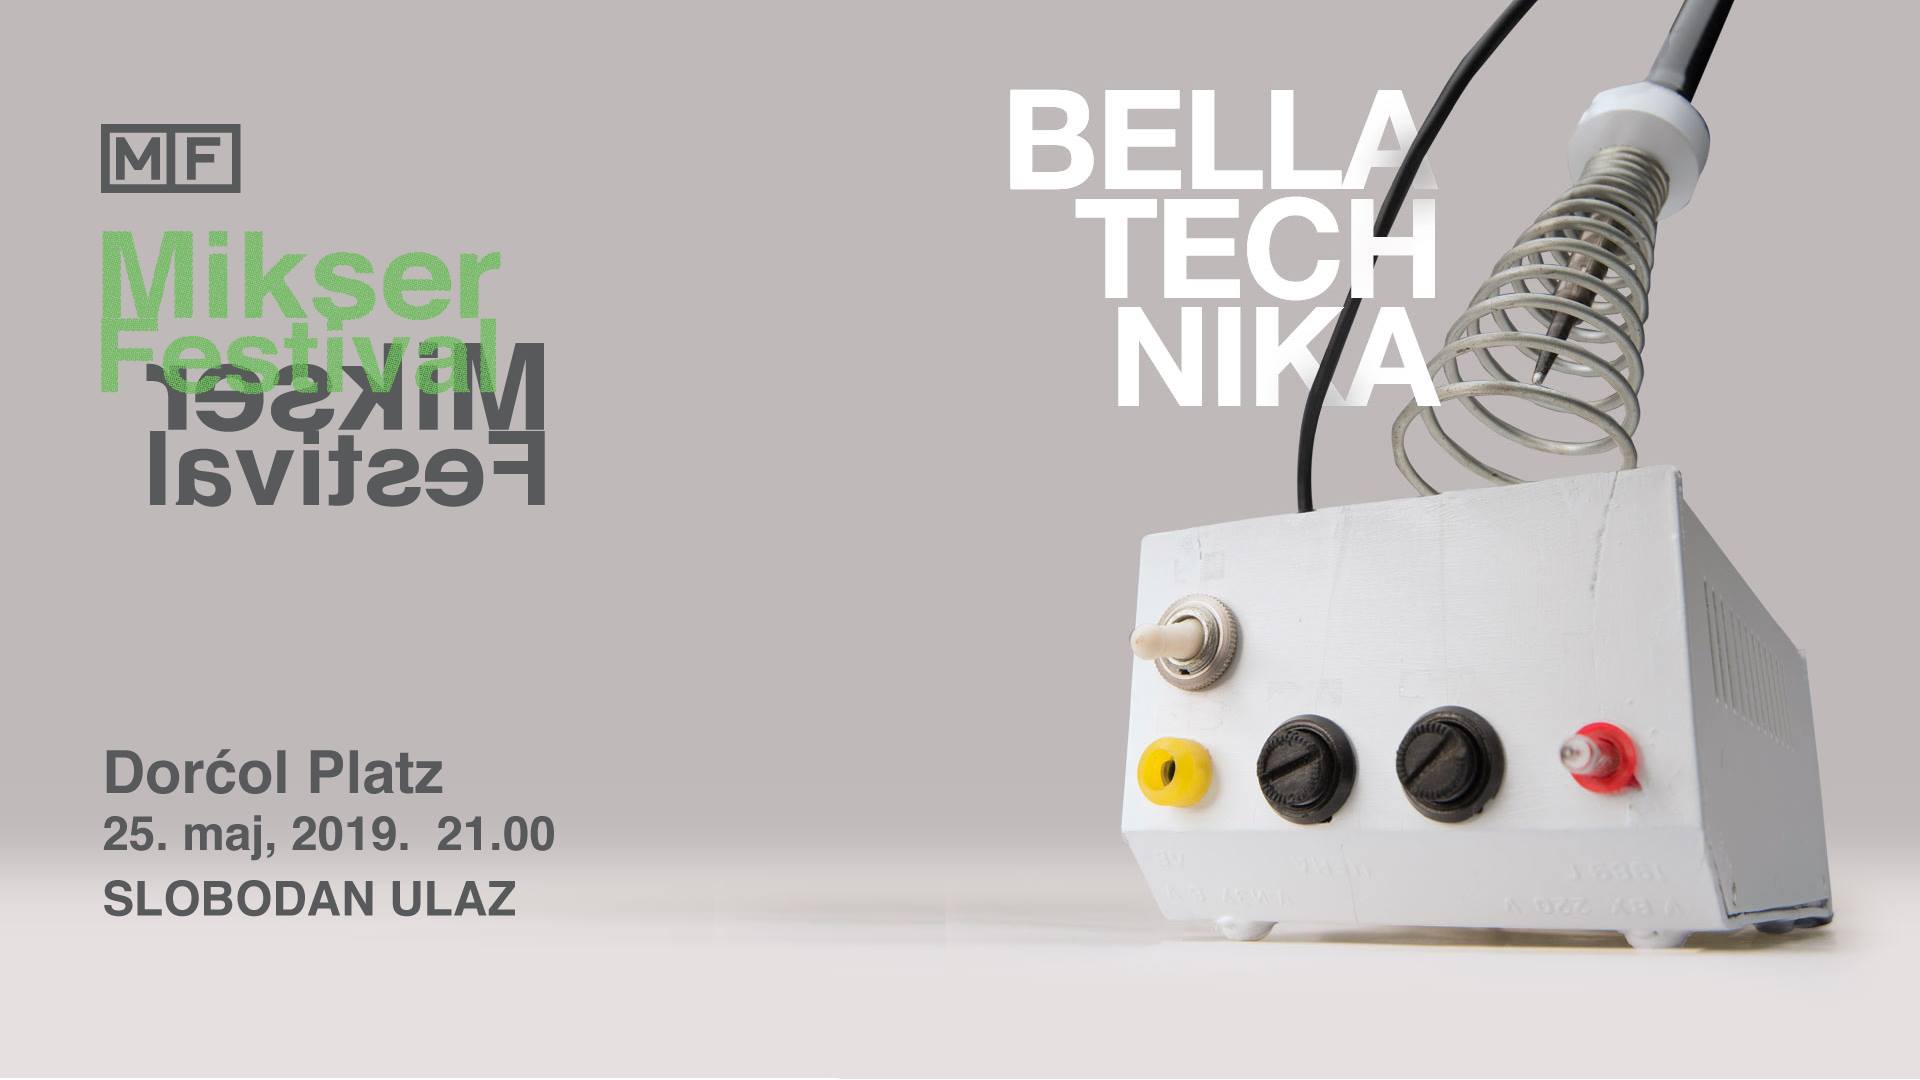 Bella Technika, premijerno na Mikseru 24.05.2019. Dorćol Platz